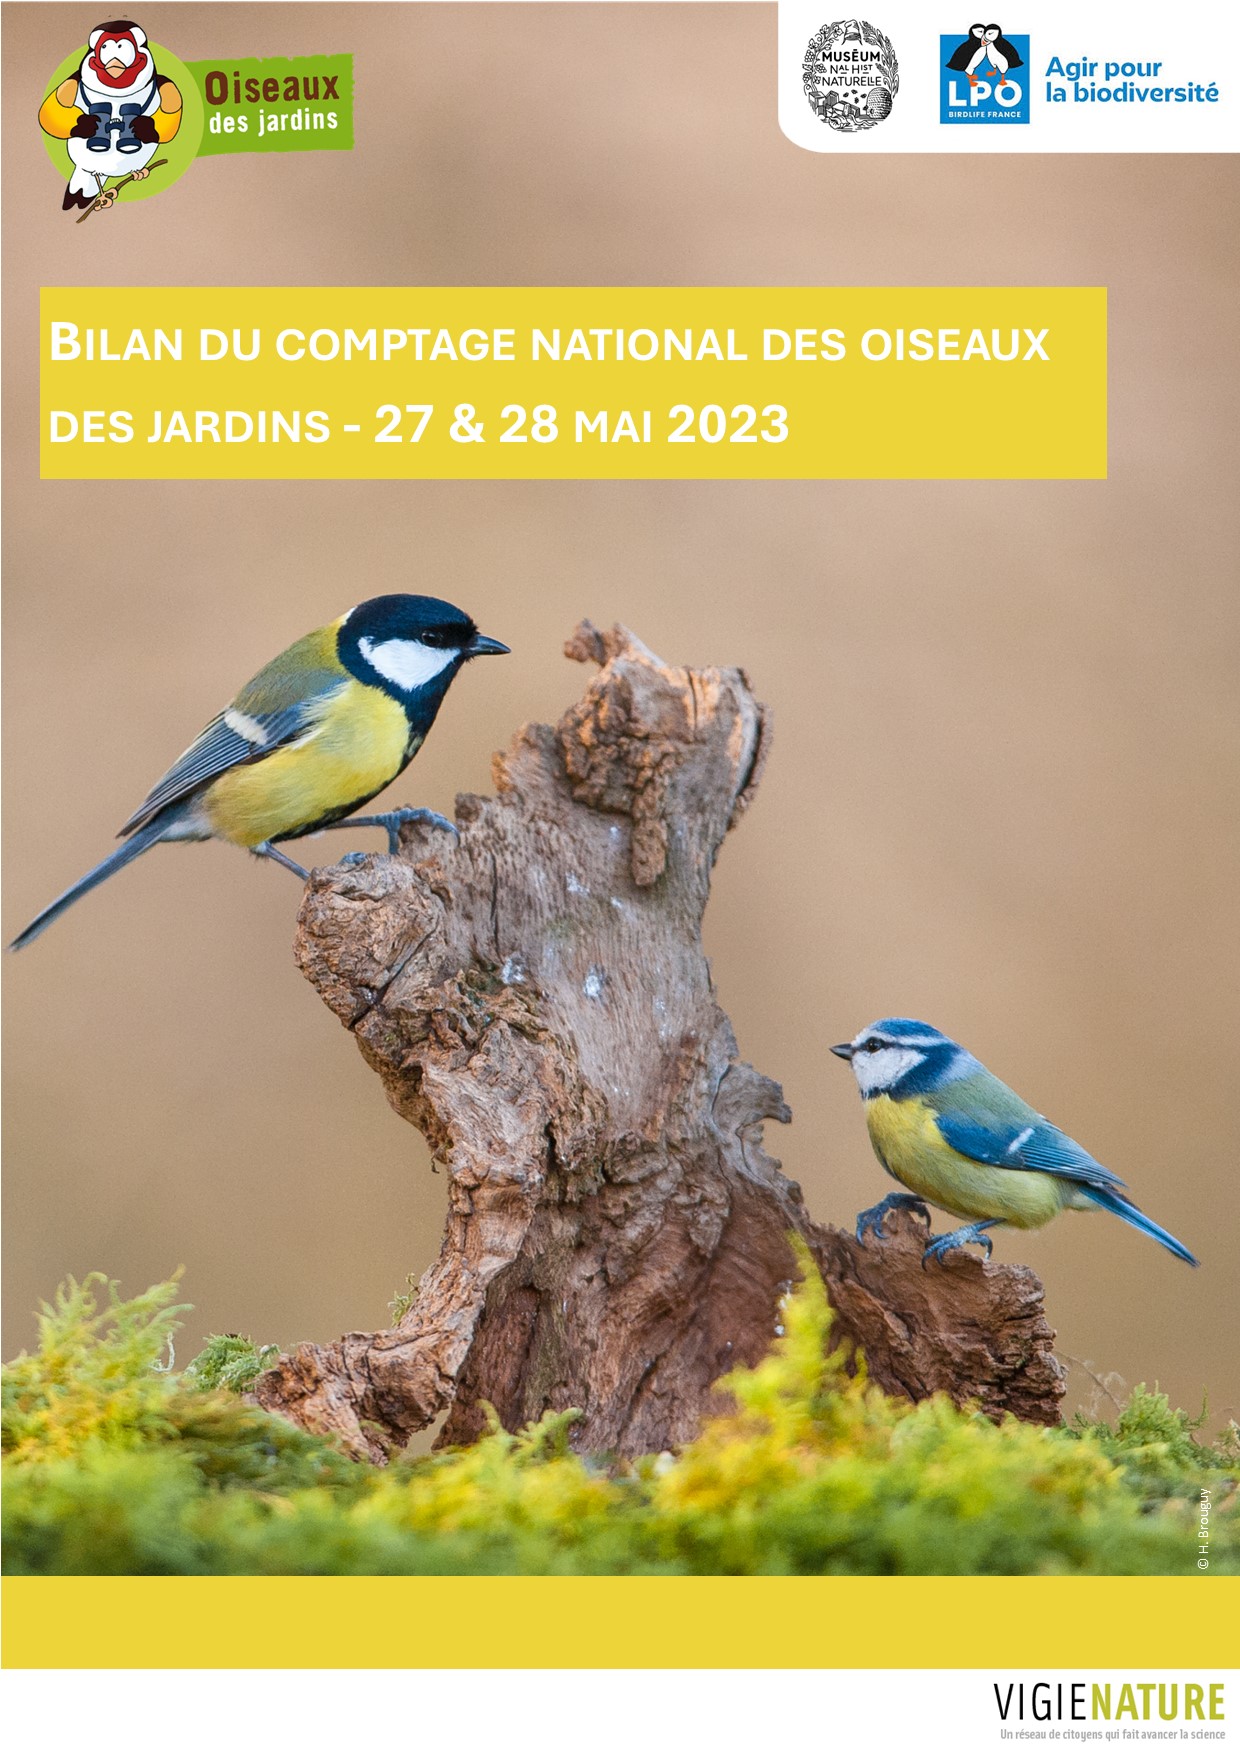 https://cdnfiles1.biolovision.net/www.oiseauxdesjardins.fr/userfiles/VisuelBilancomptageodjmai2023.jpg